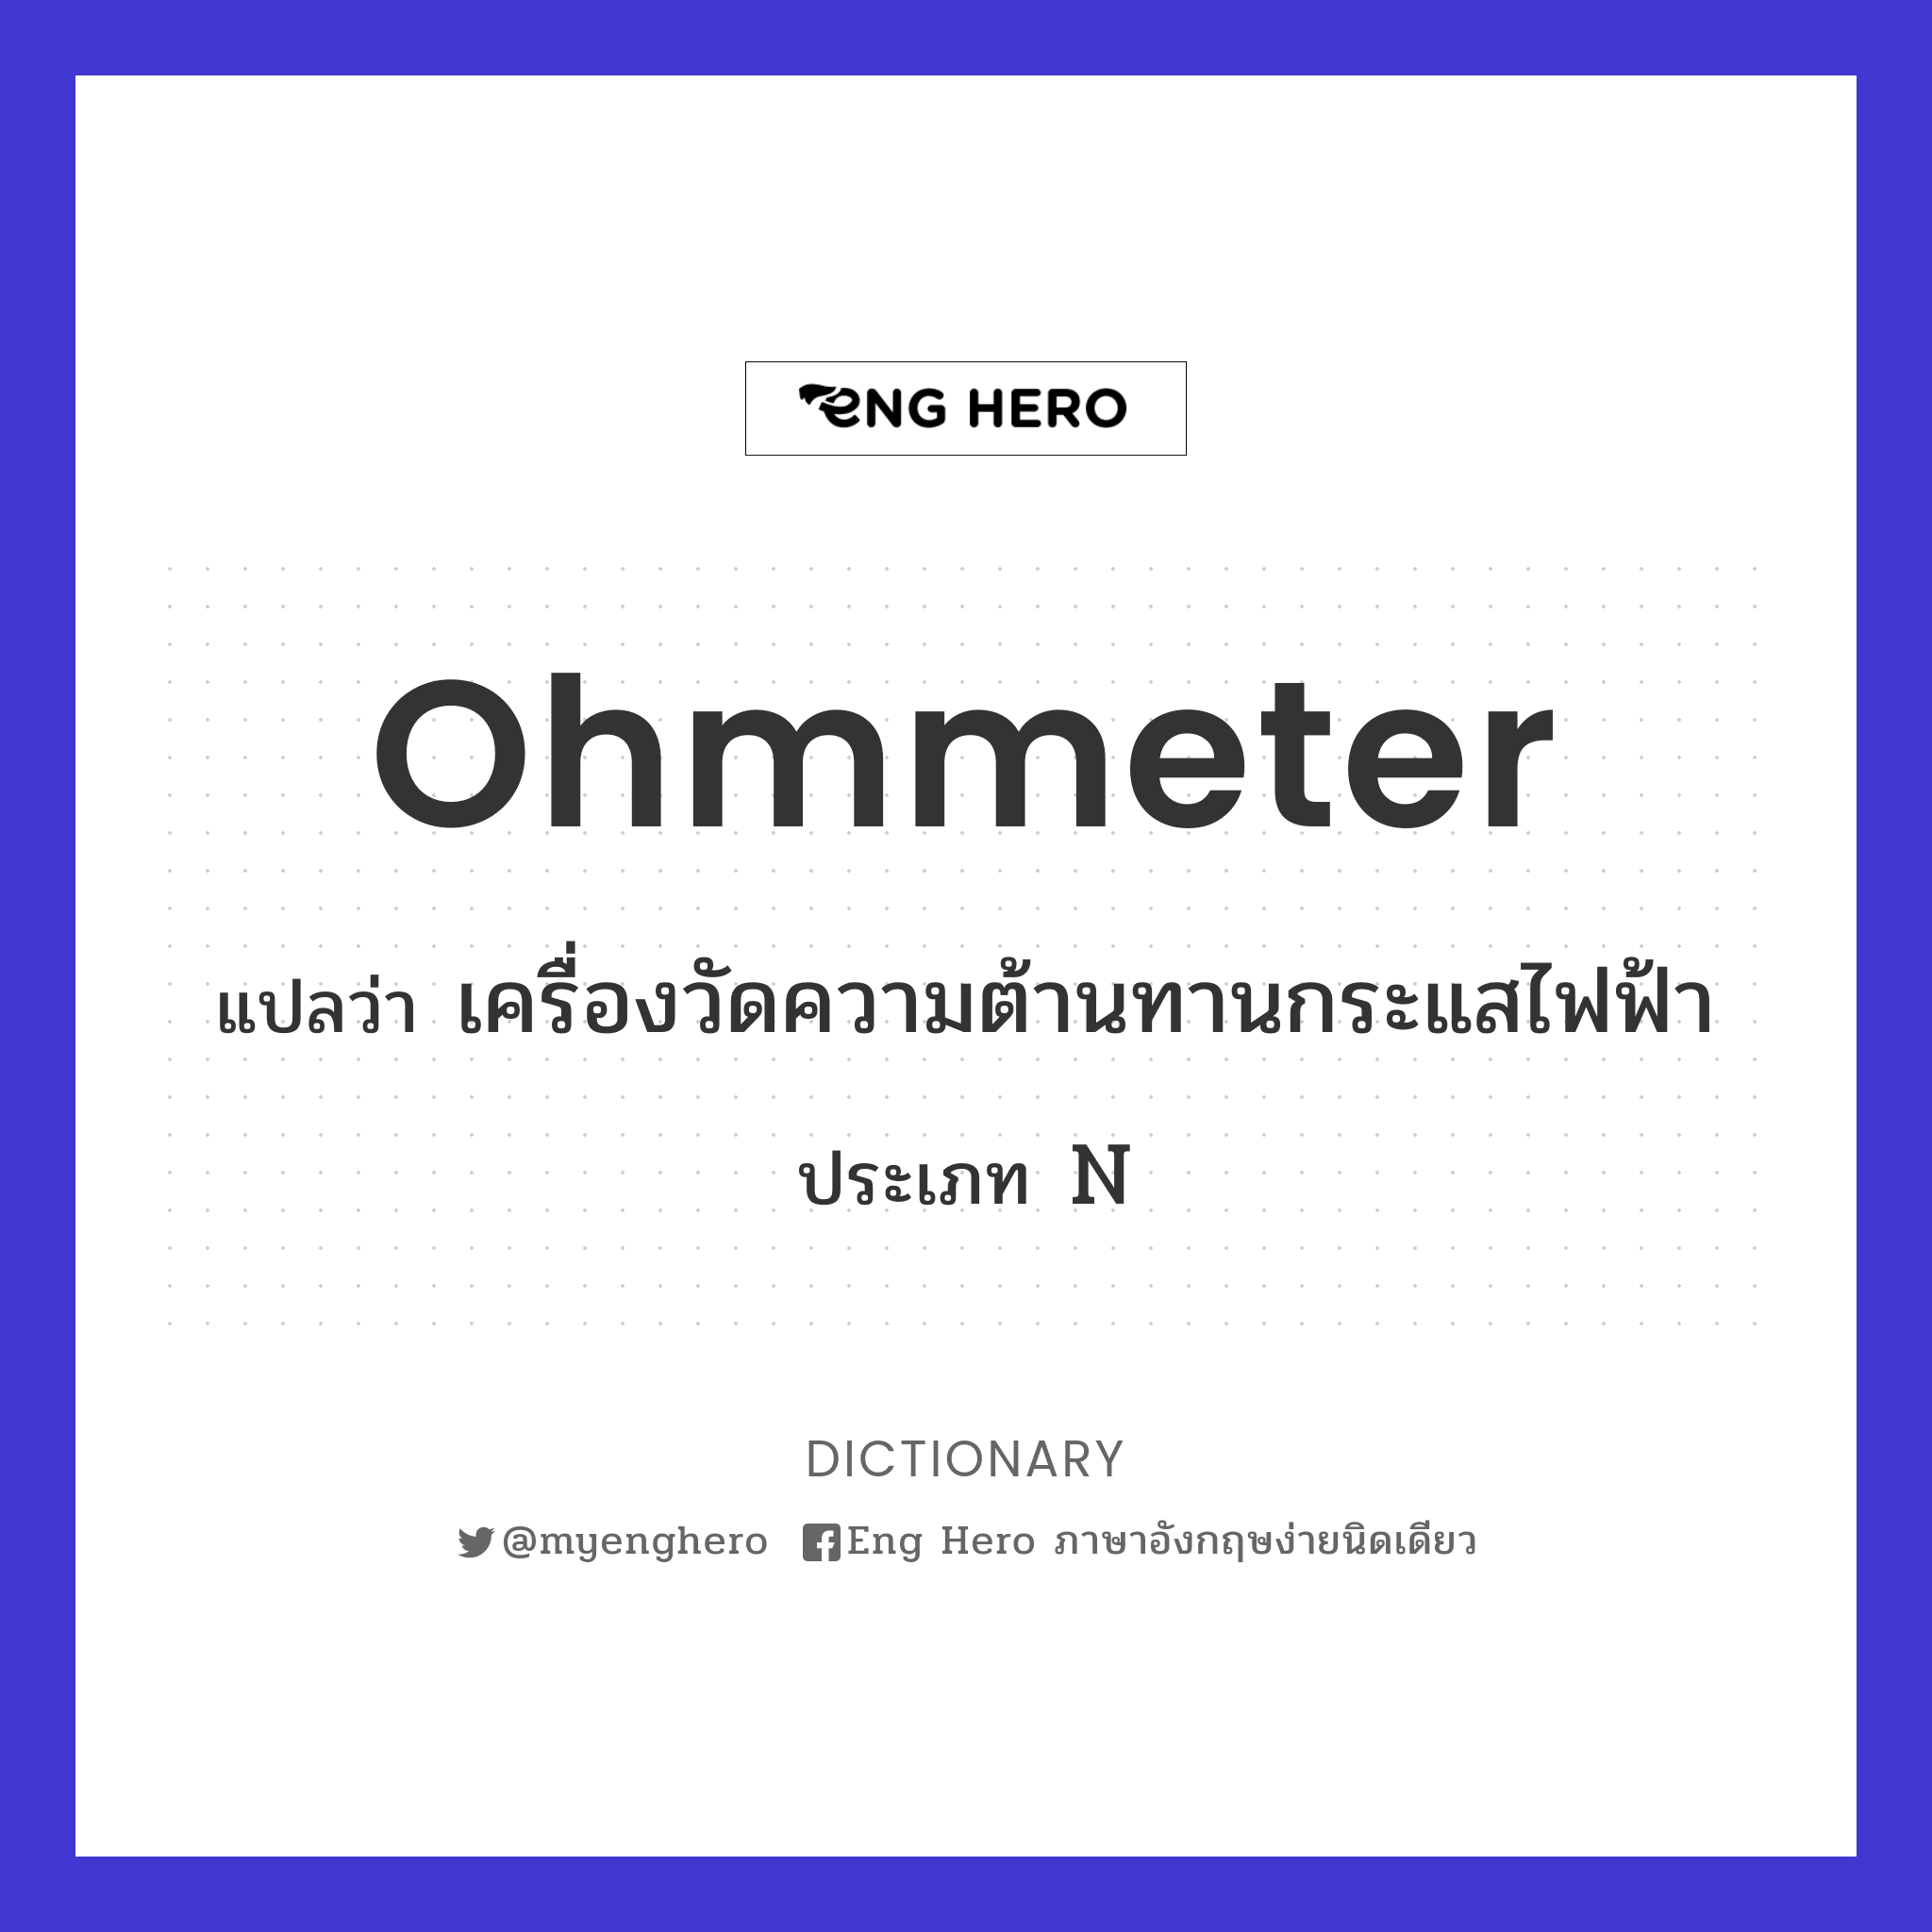 ohmmeter